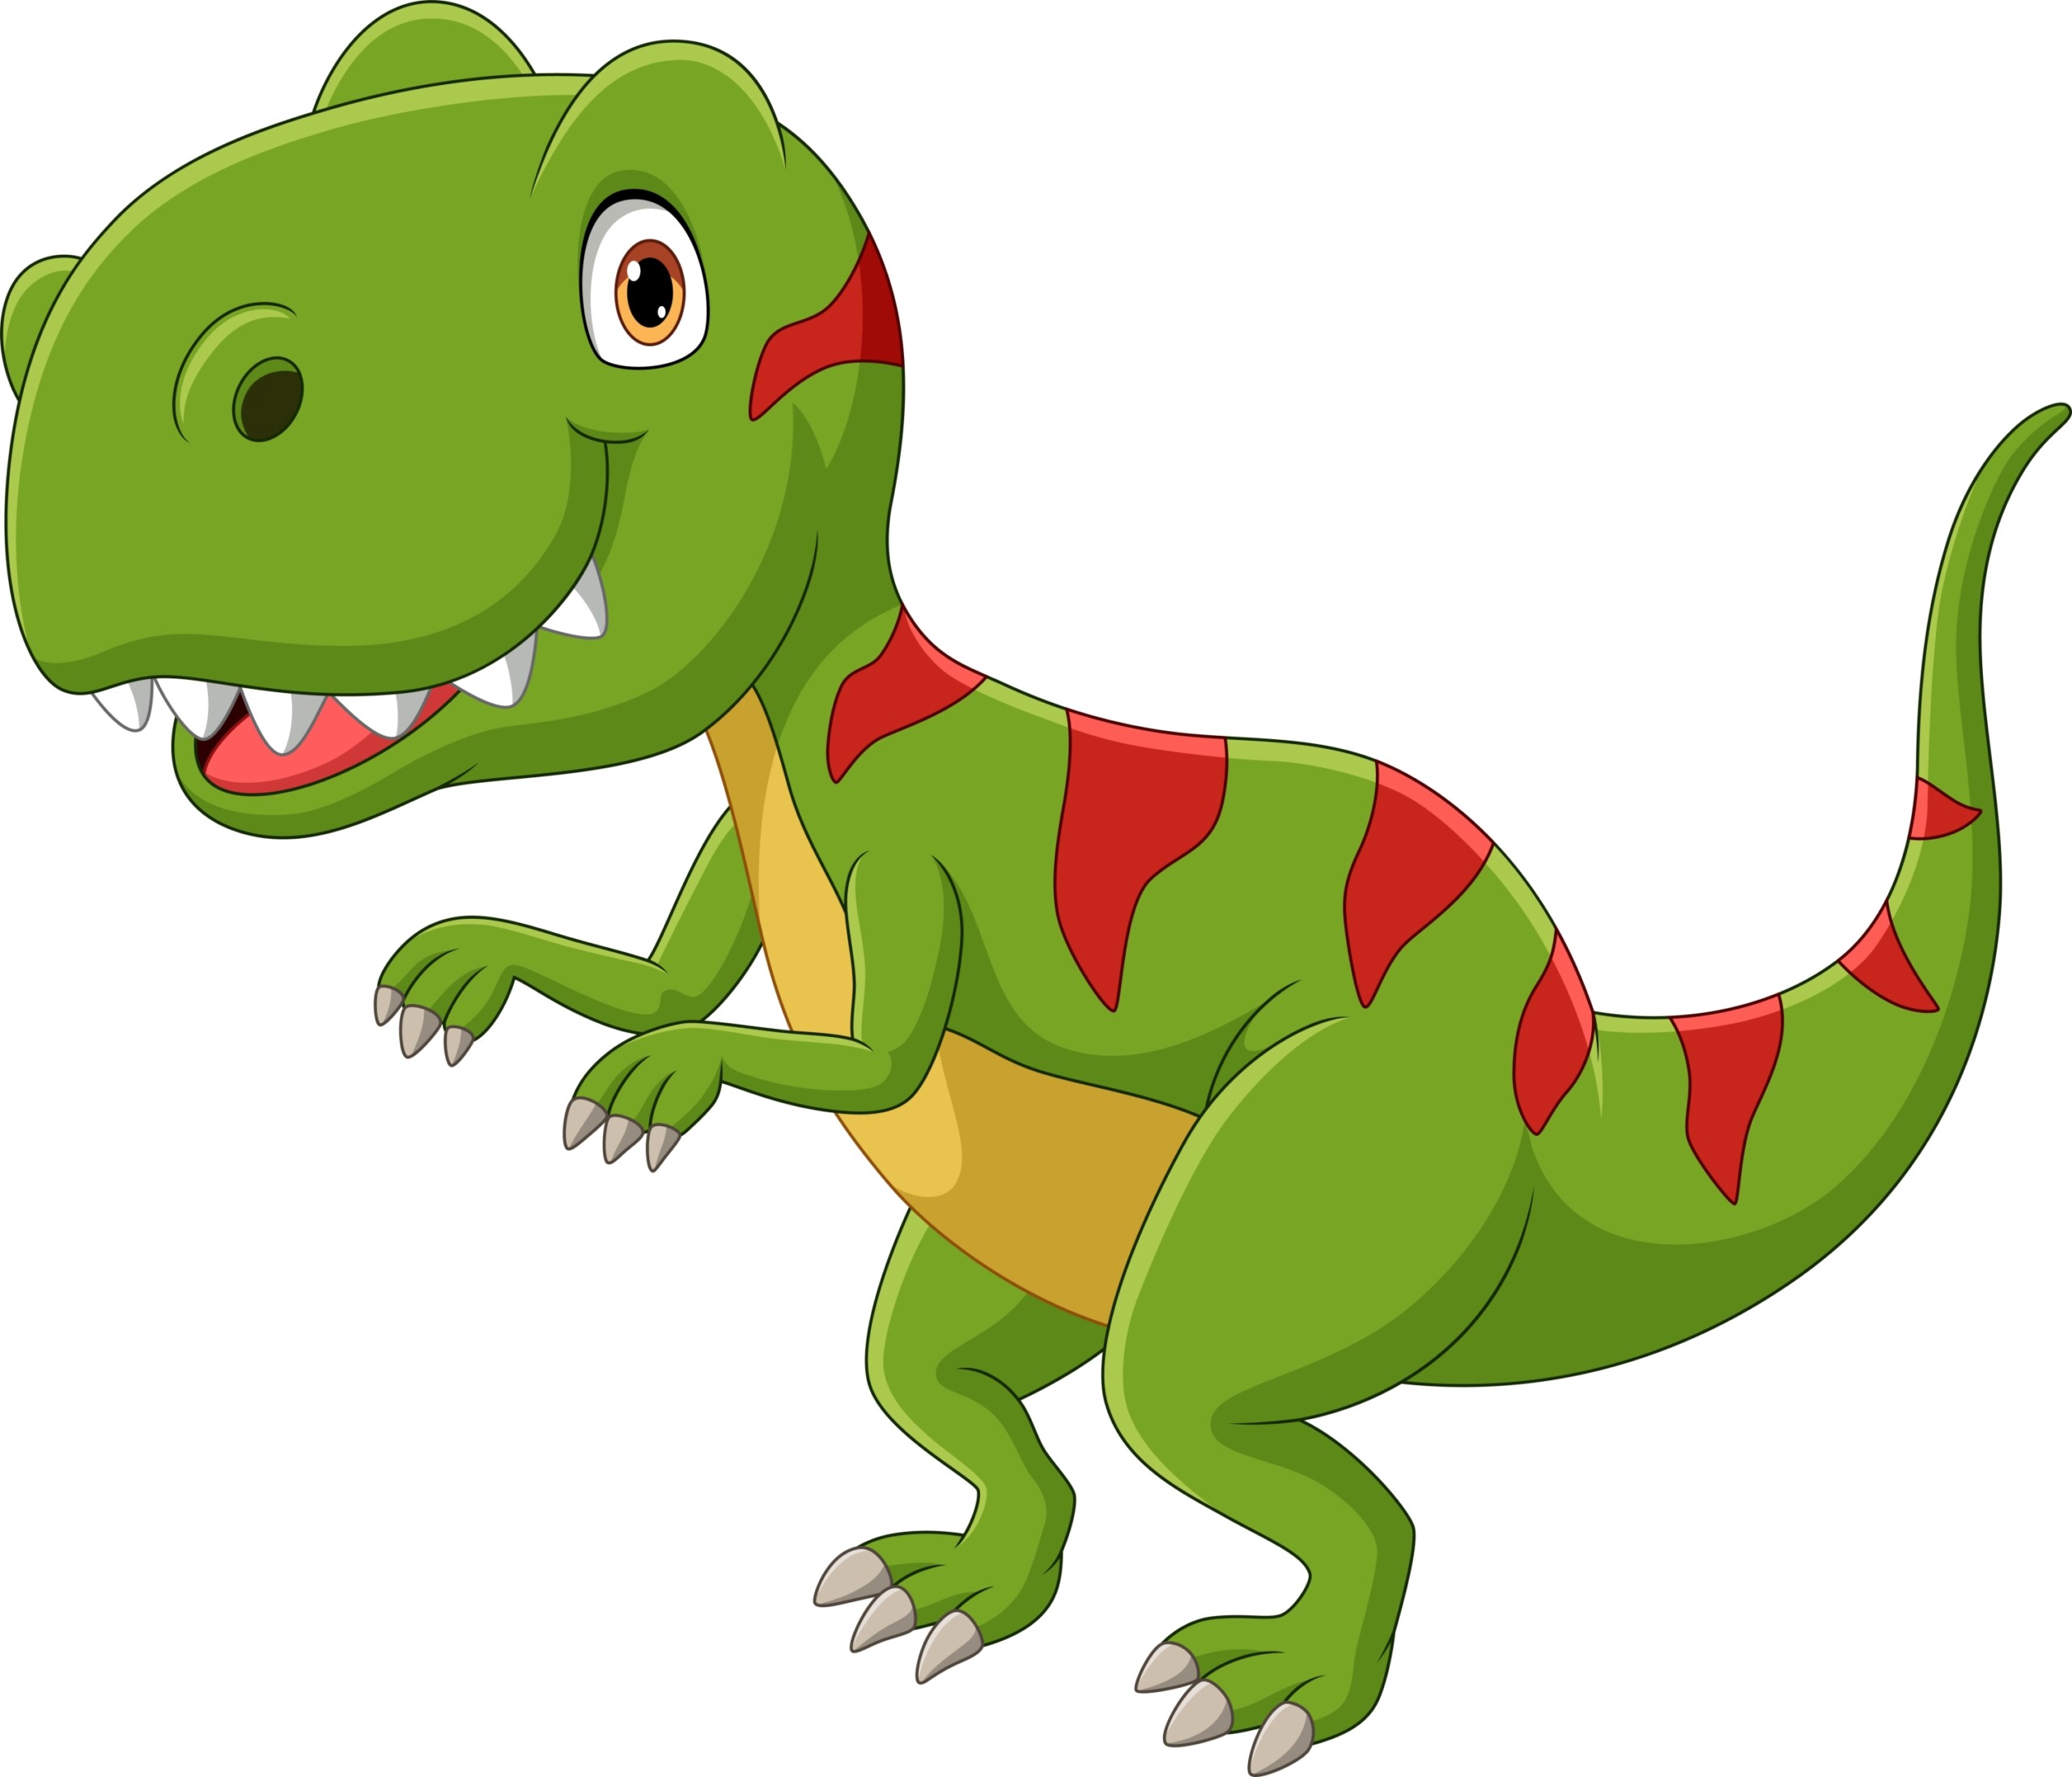 Cartoon Green Dinosaur - Original image